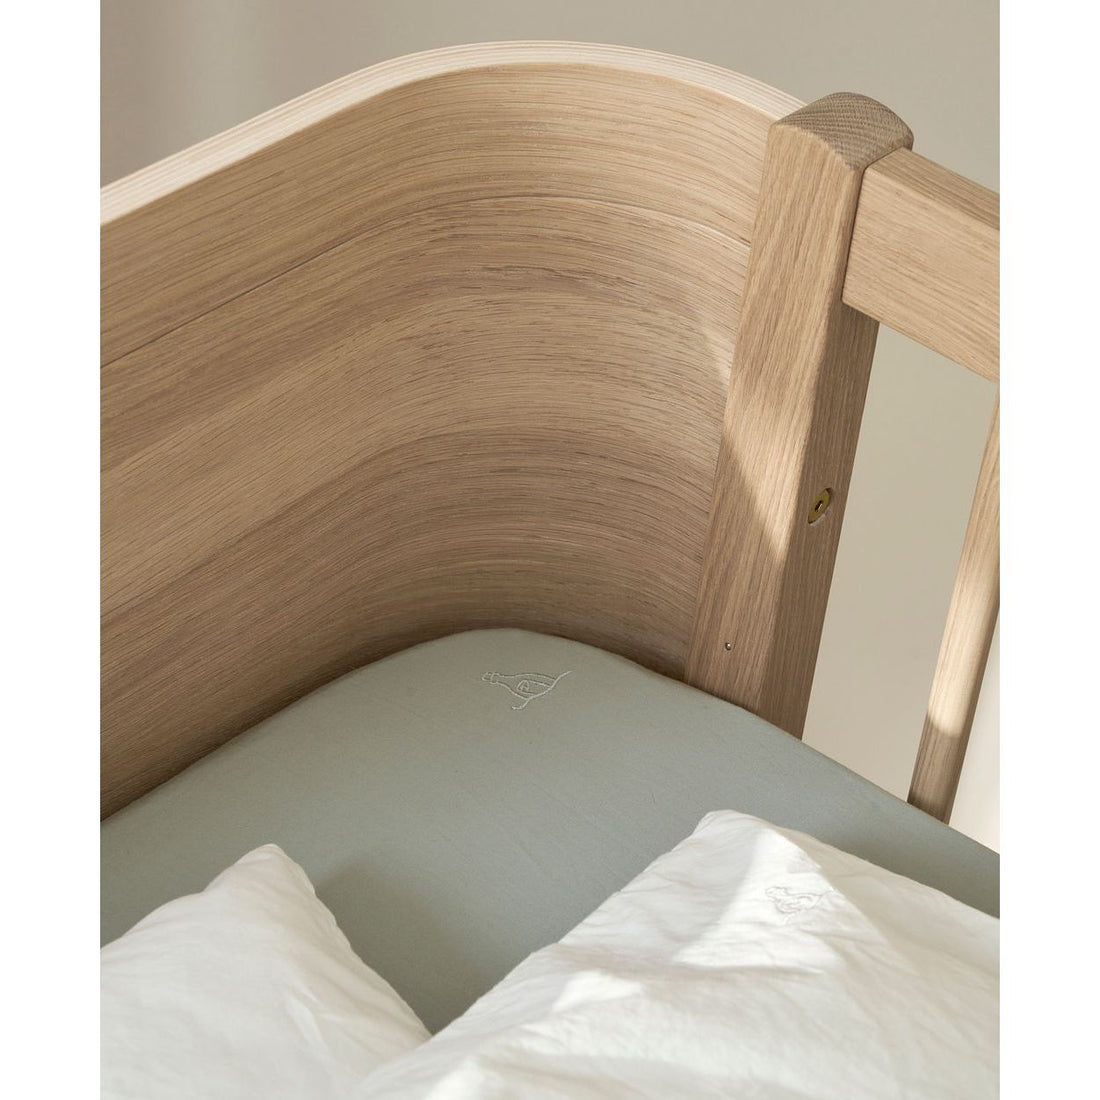 Oliver Furniture Wood Mini+ Junior Bed Oak